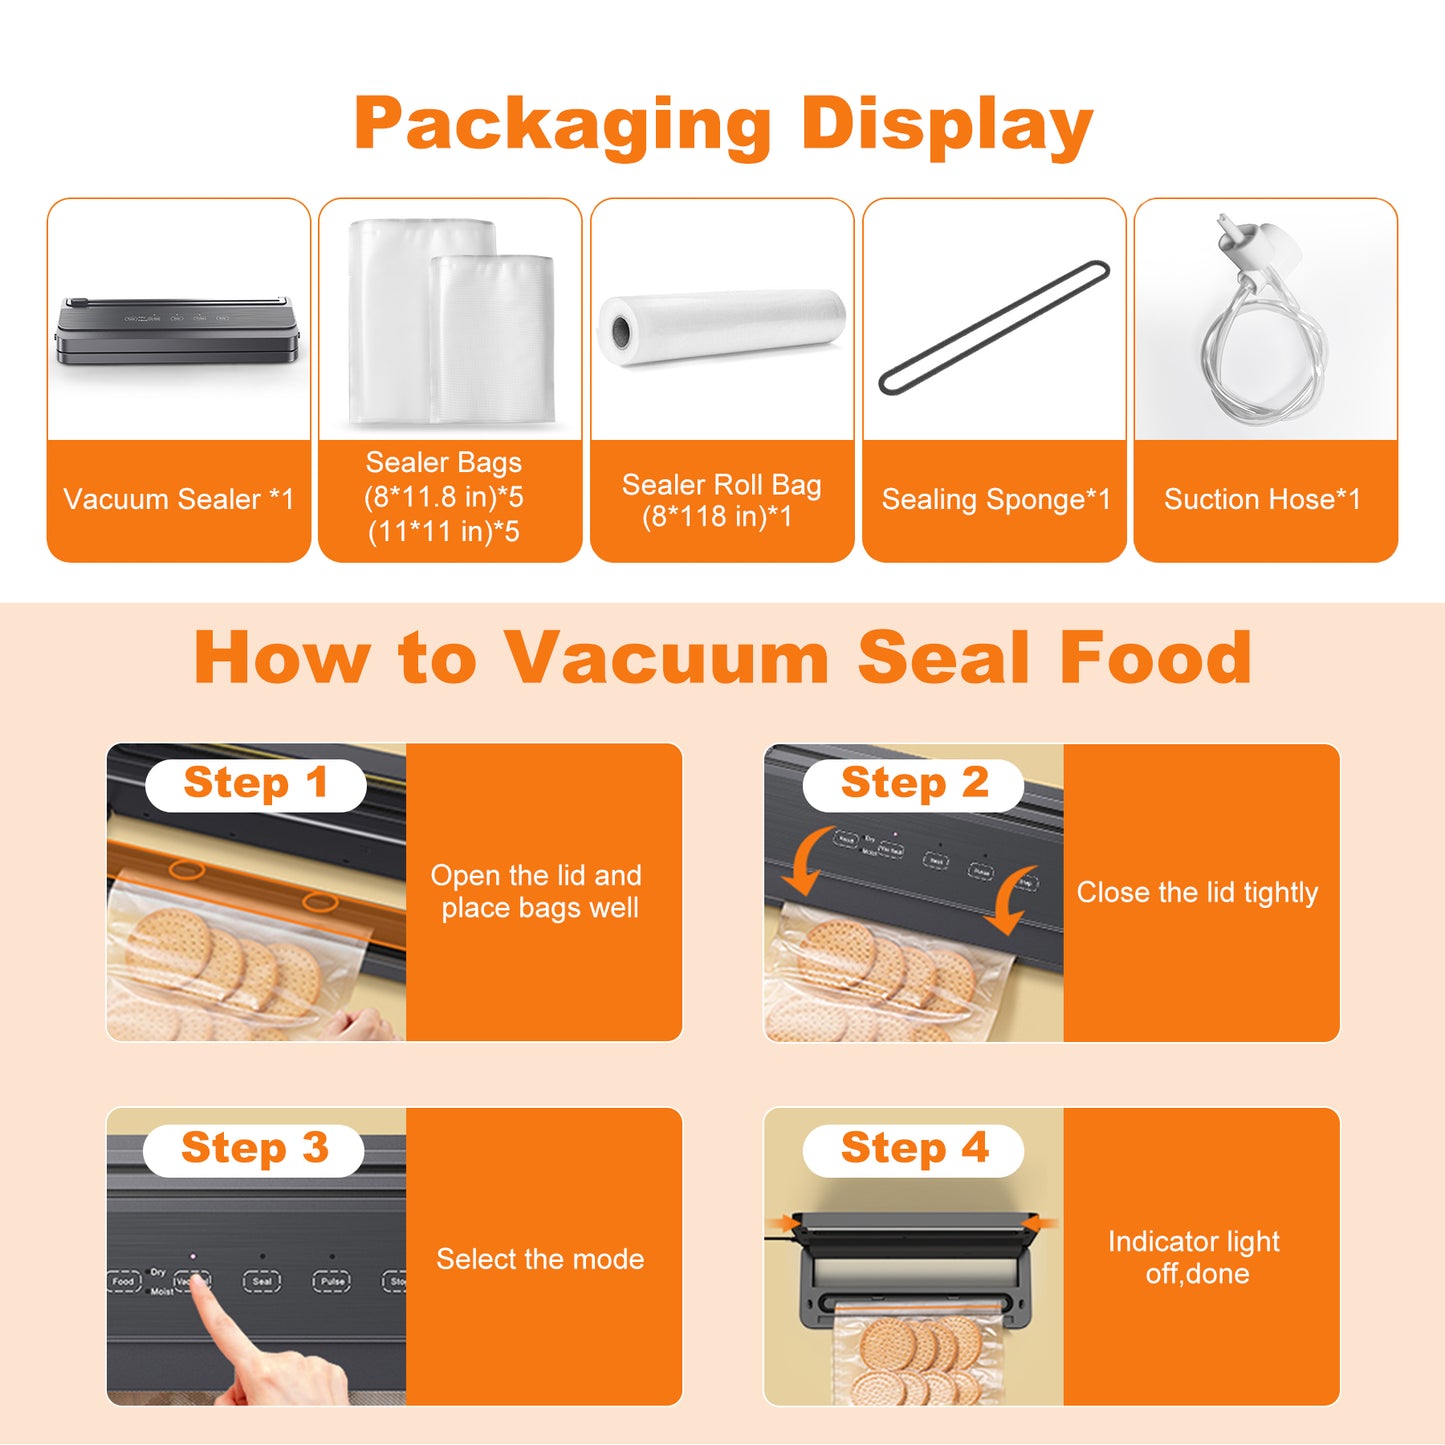 ALROCKET Vacuum Sealer Machine, 5 in 1 Food Vacuum Sealer with Dry & Moist Food Modes, Led Indicator Lights, Starter Kit with Vacuum Bag Roll and Vacuum Hose, Built-in Cutter, Sealing Sponge